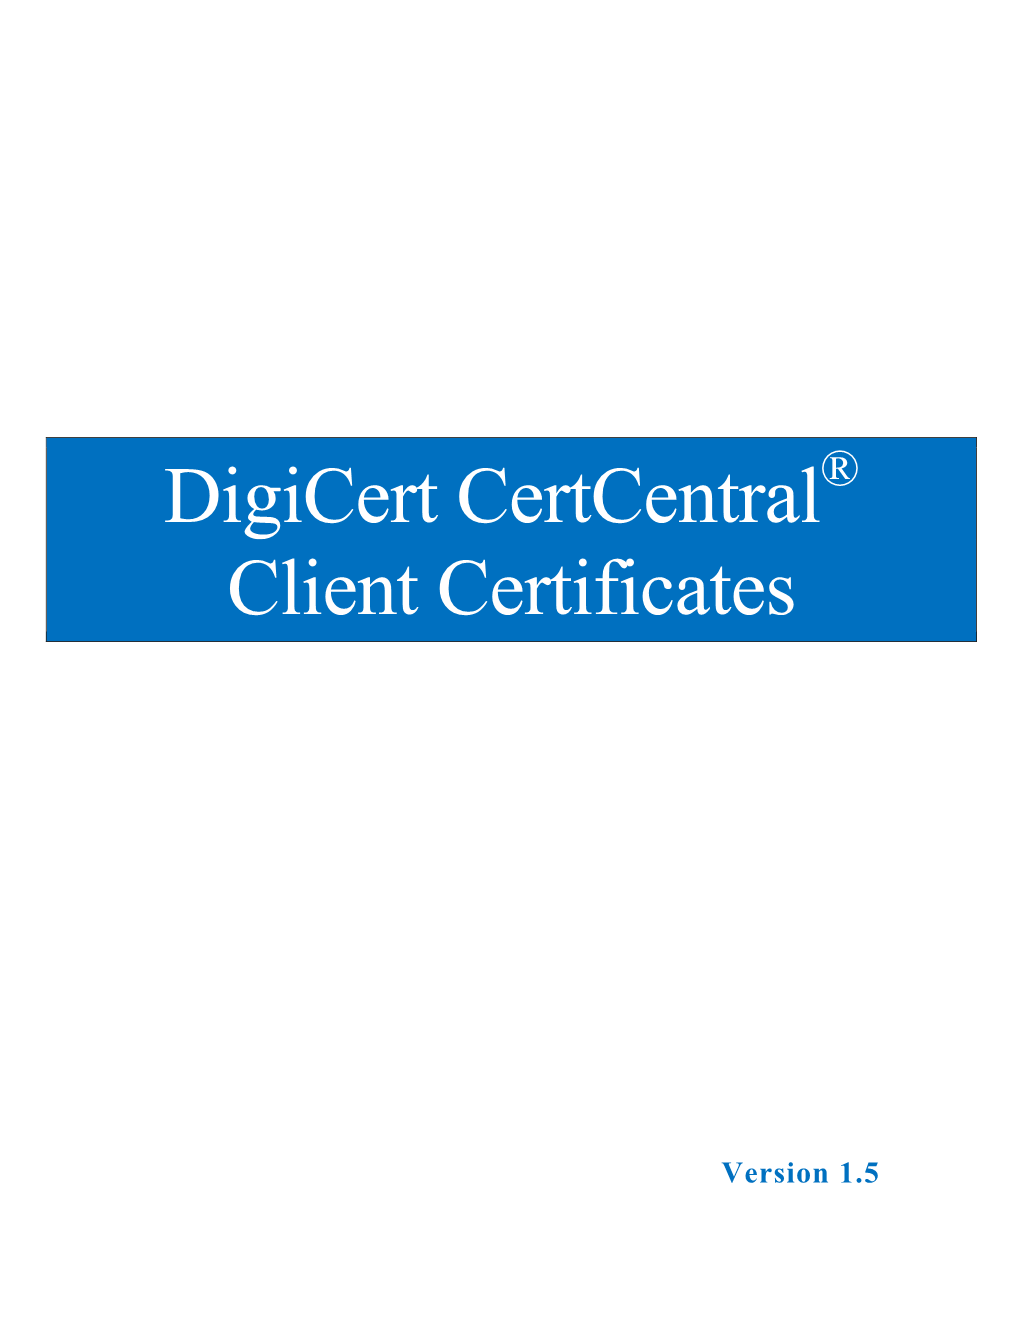 Digicert Certcentral Client Certificates